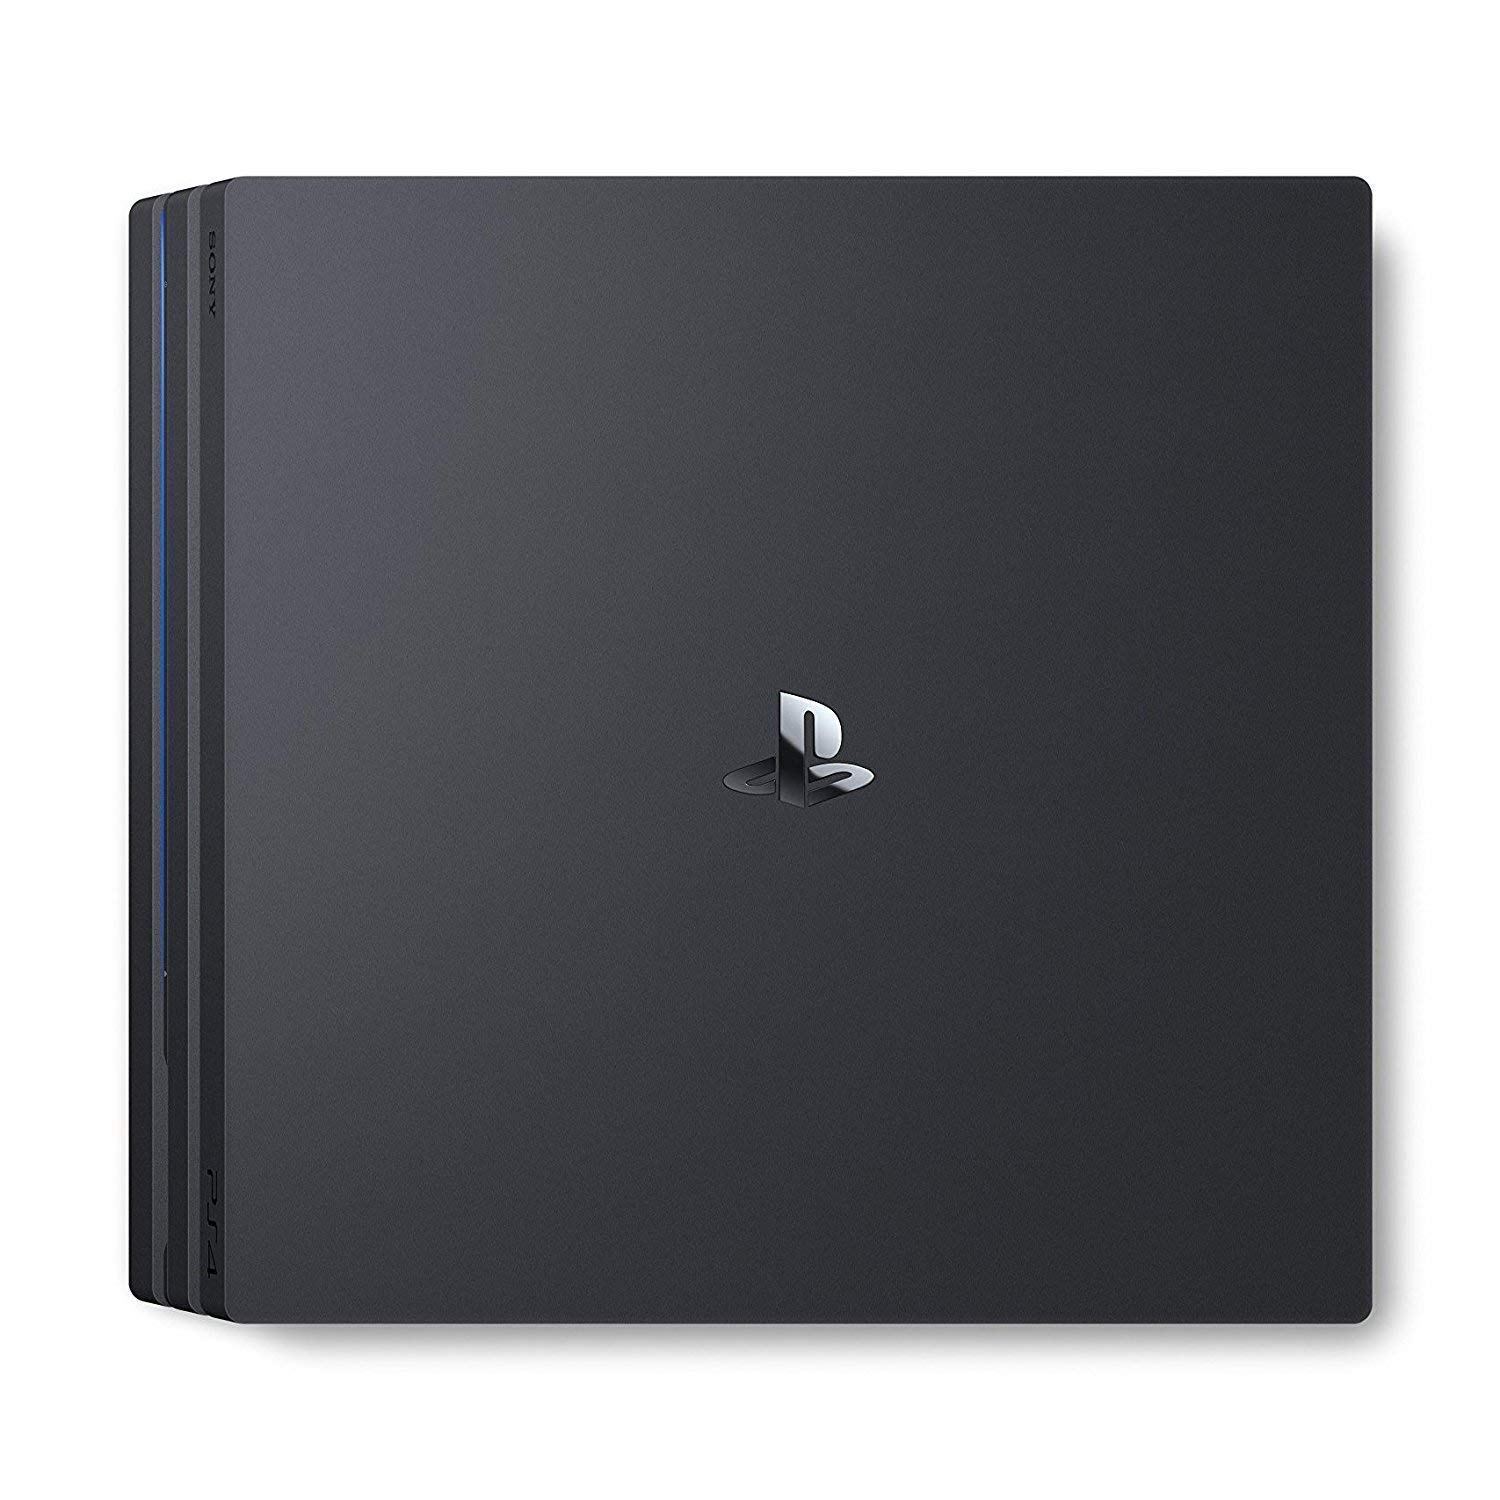 PlayStation 4 Pro CUH-7200 Series 2TB (Jet Black)